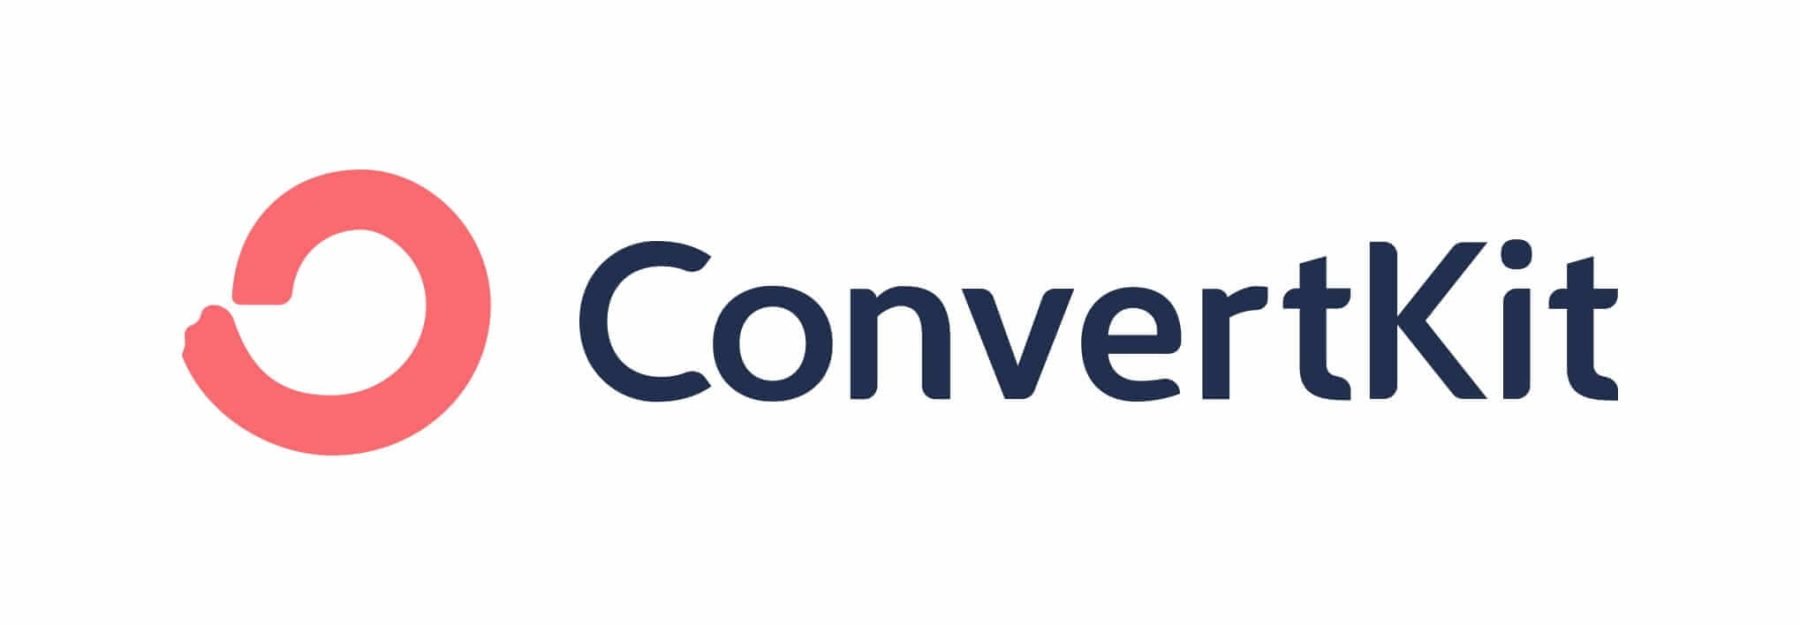 marchio del logo convertkit